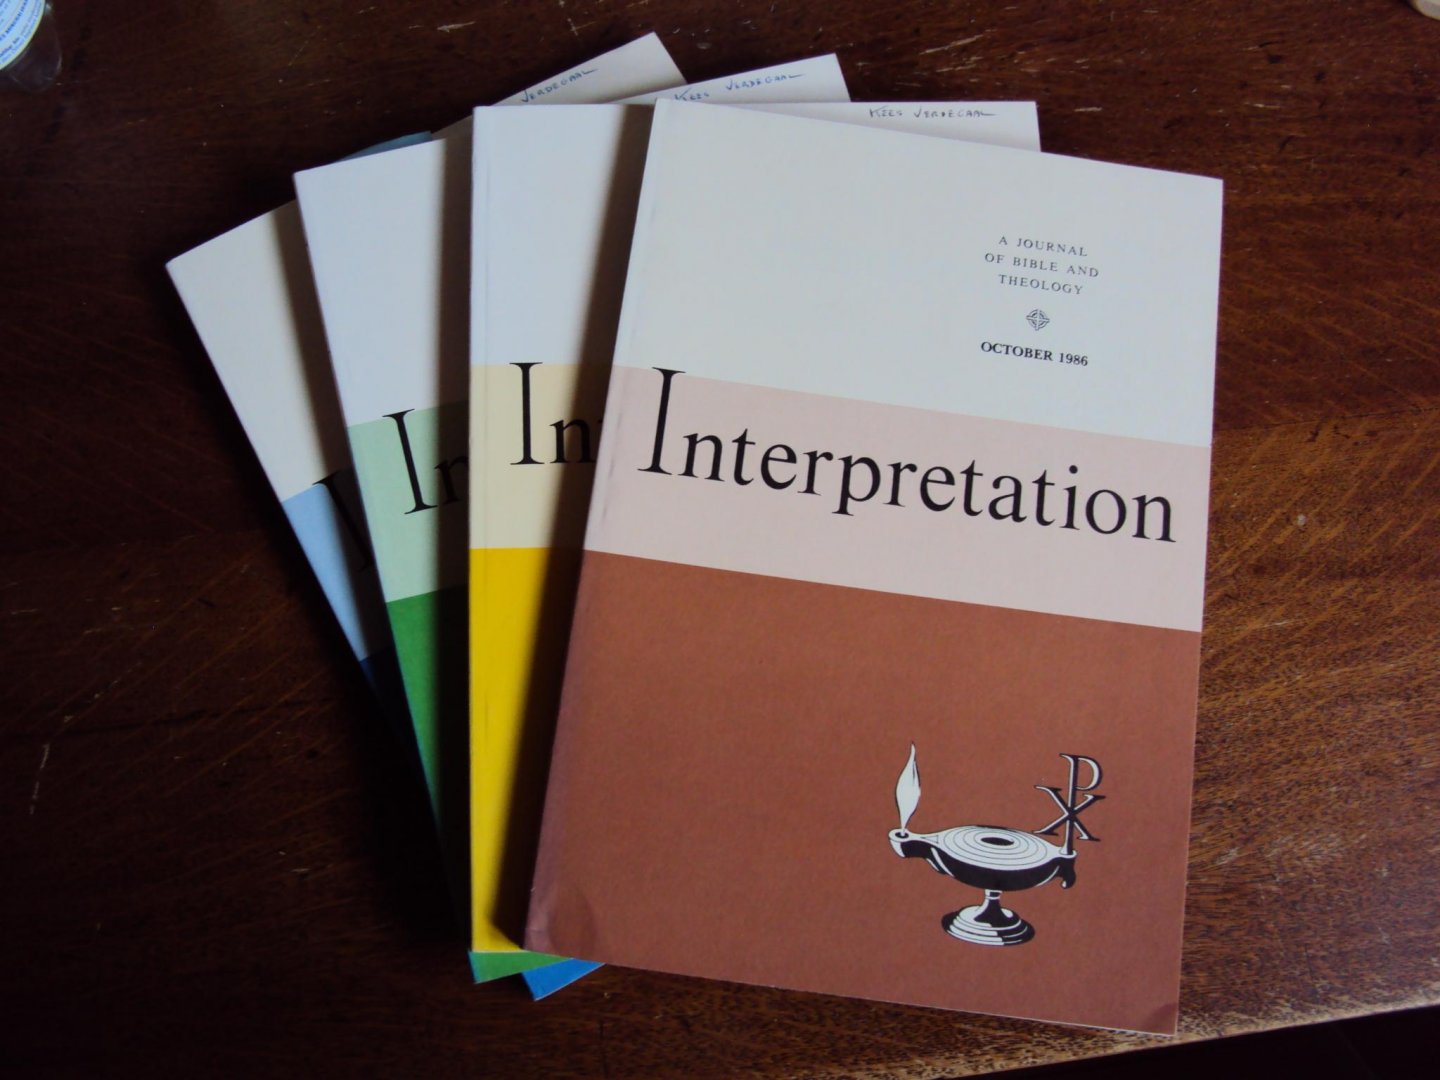  - Interpretation. A Journal of Bible and Theology, Vol. XL nos. 1-4